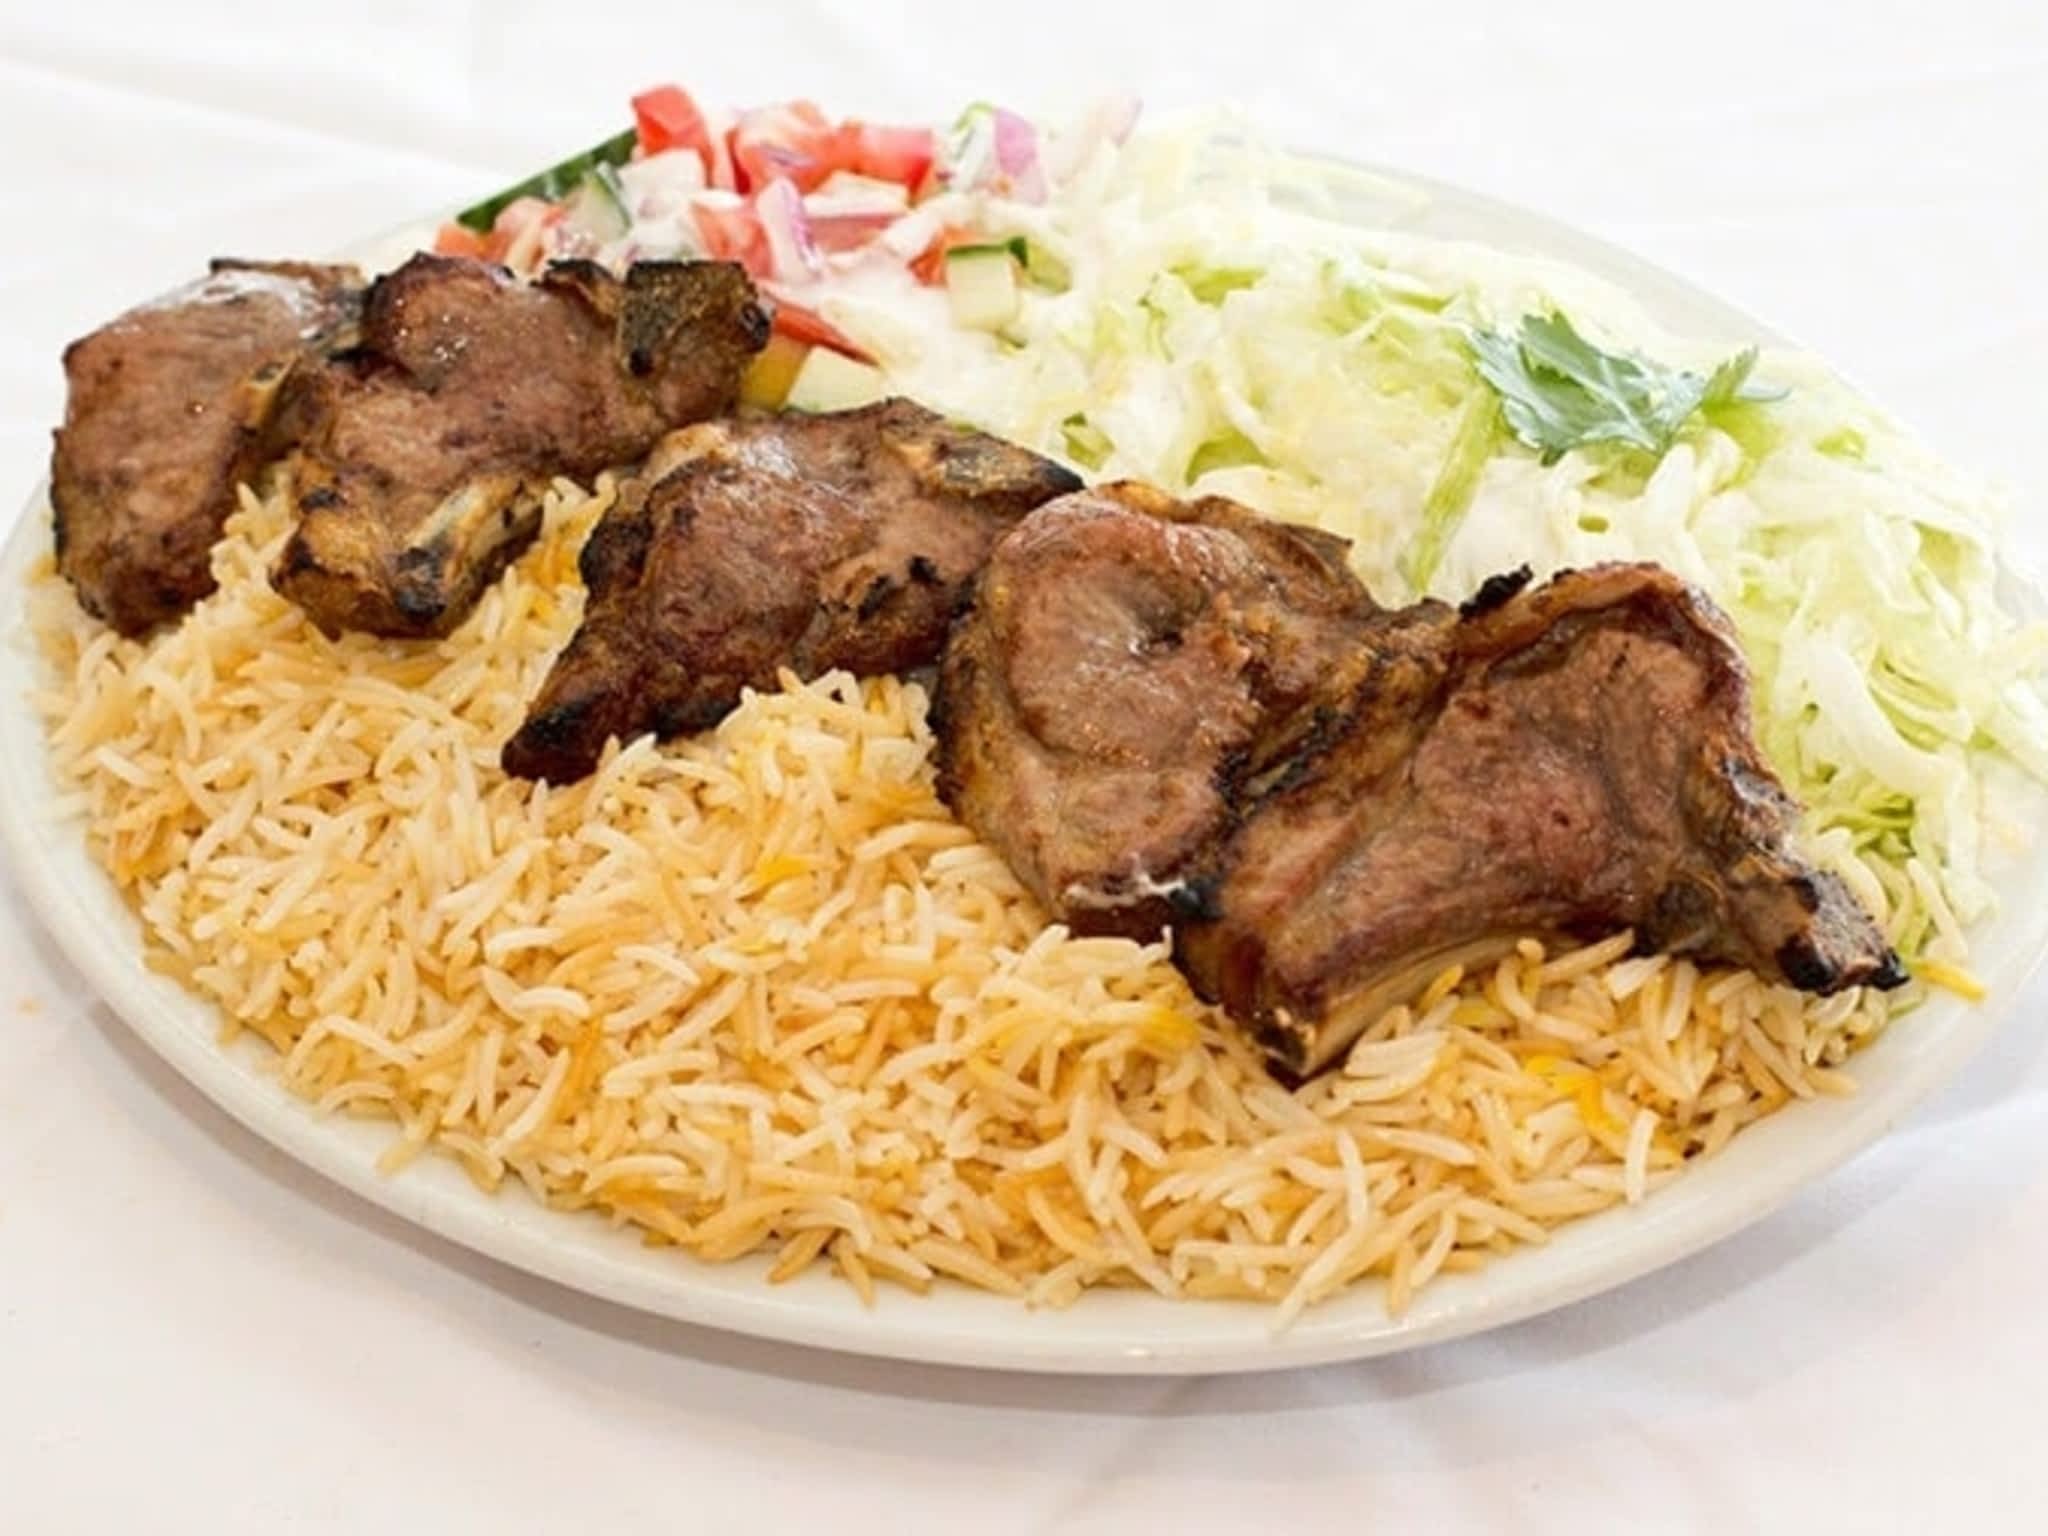 photo Baghlan Kabob Restaurant